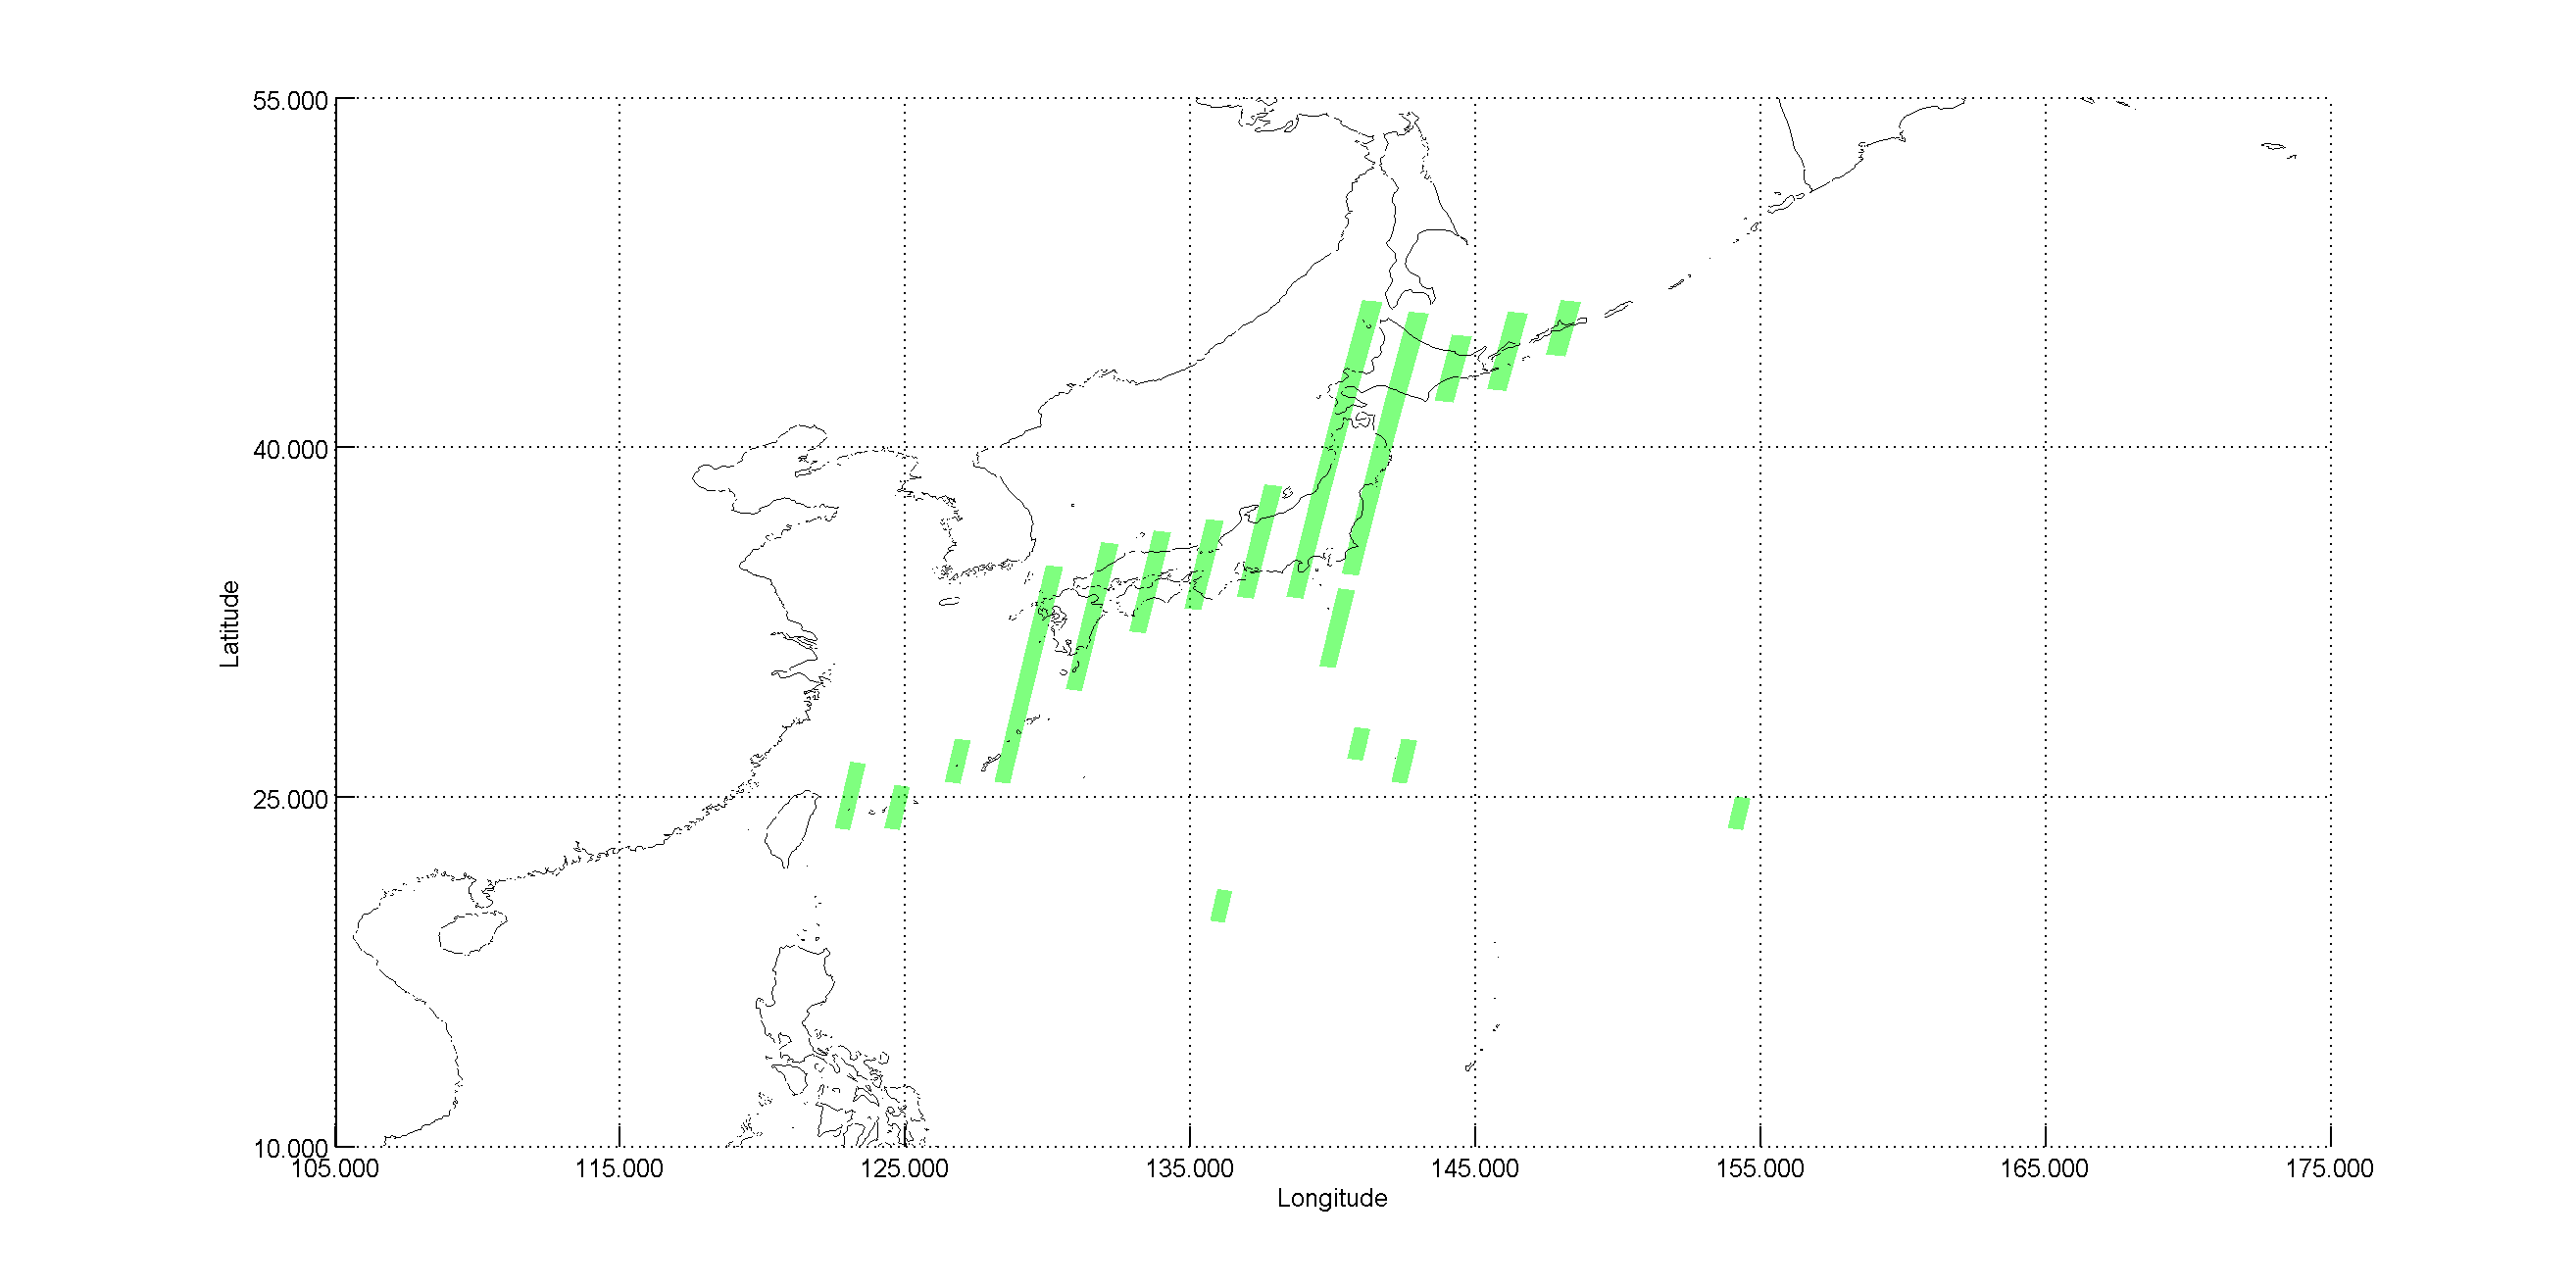 CYCLE_115 - Japan Descending passes